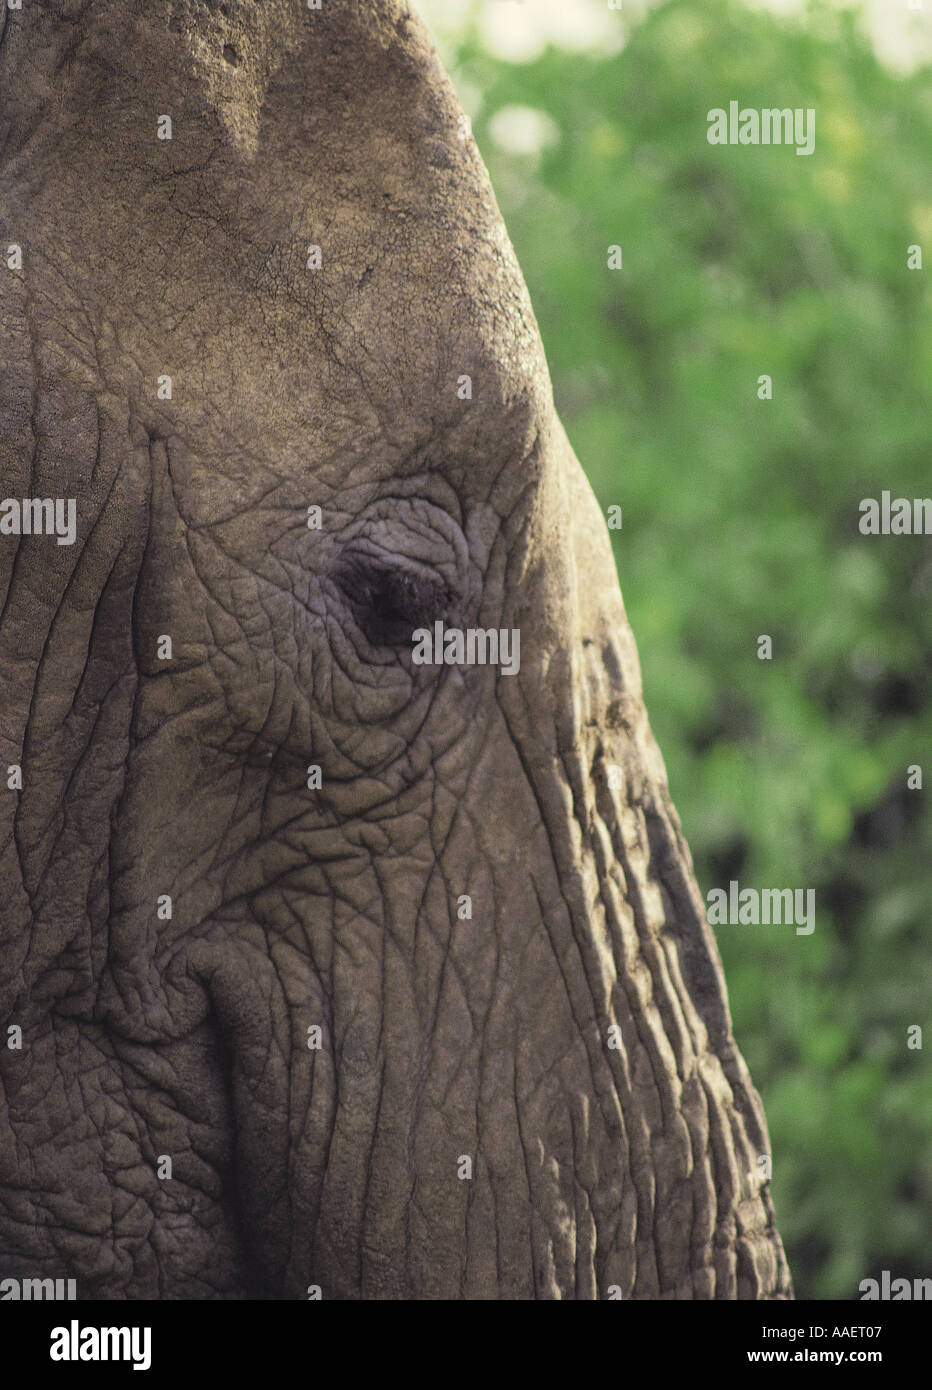 Close up profile of elephant s forehead Masai Mara National Reserve Kenya East Africa Stock Photo